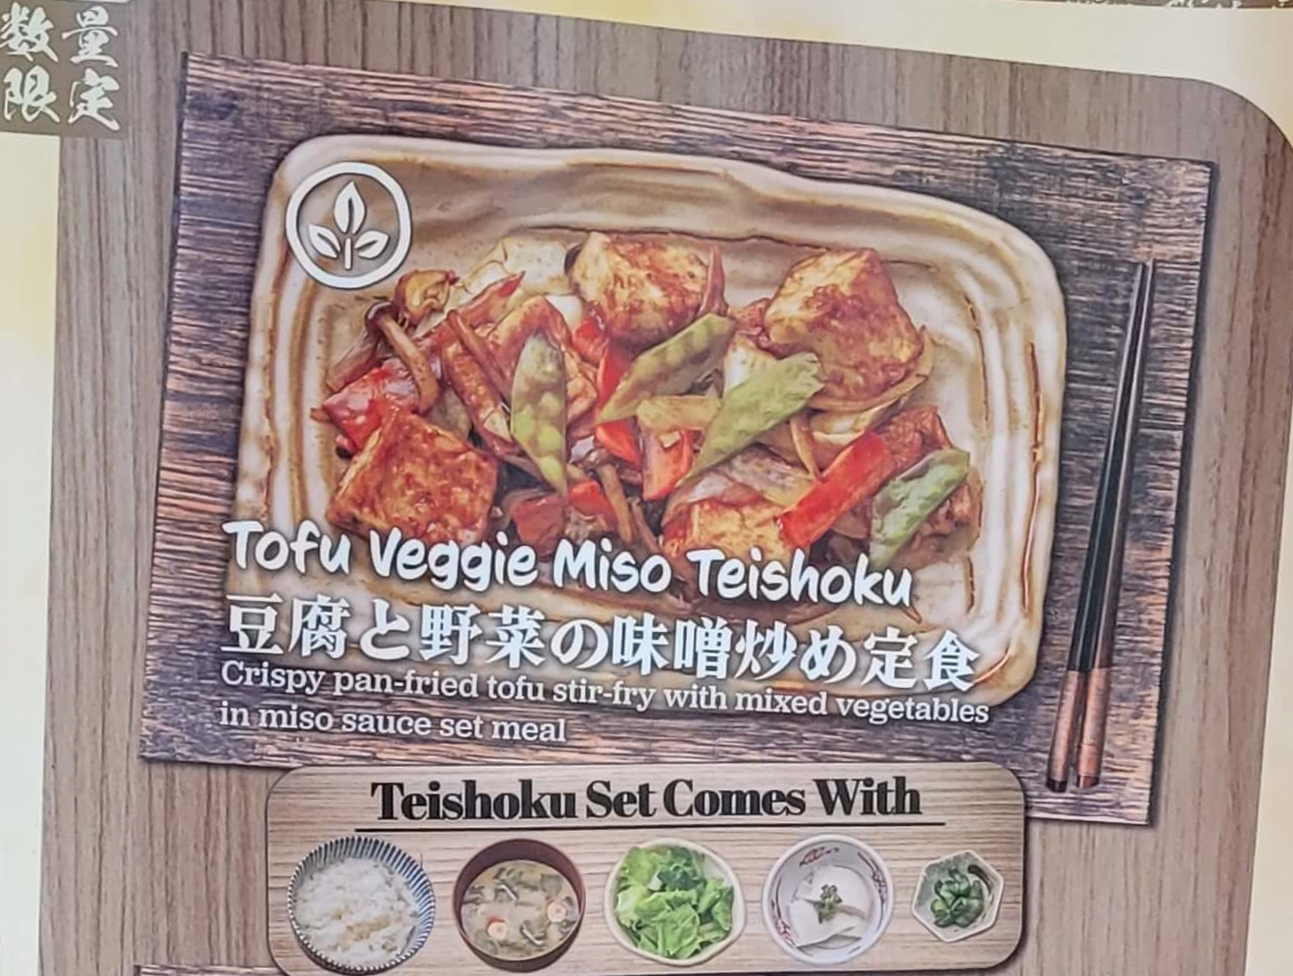 Tofu Veggie Miso Teishoku